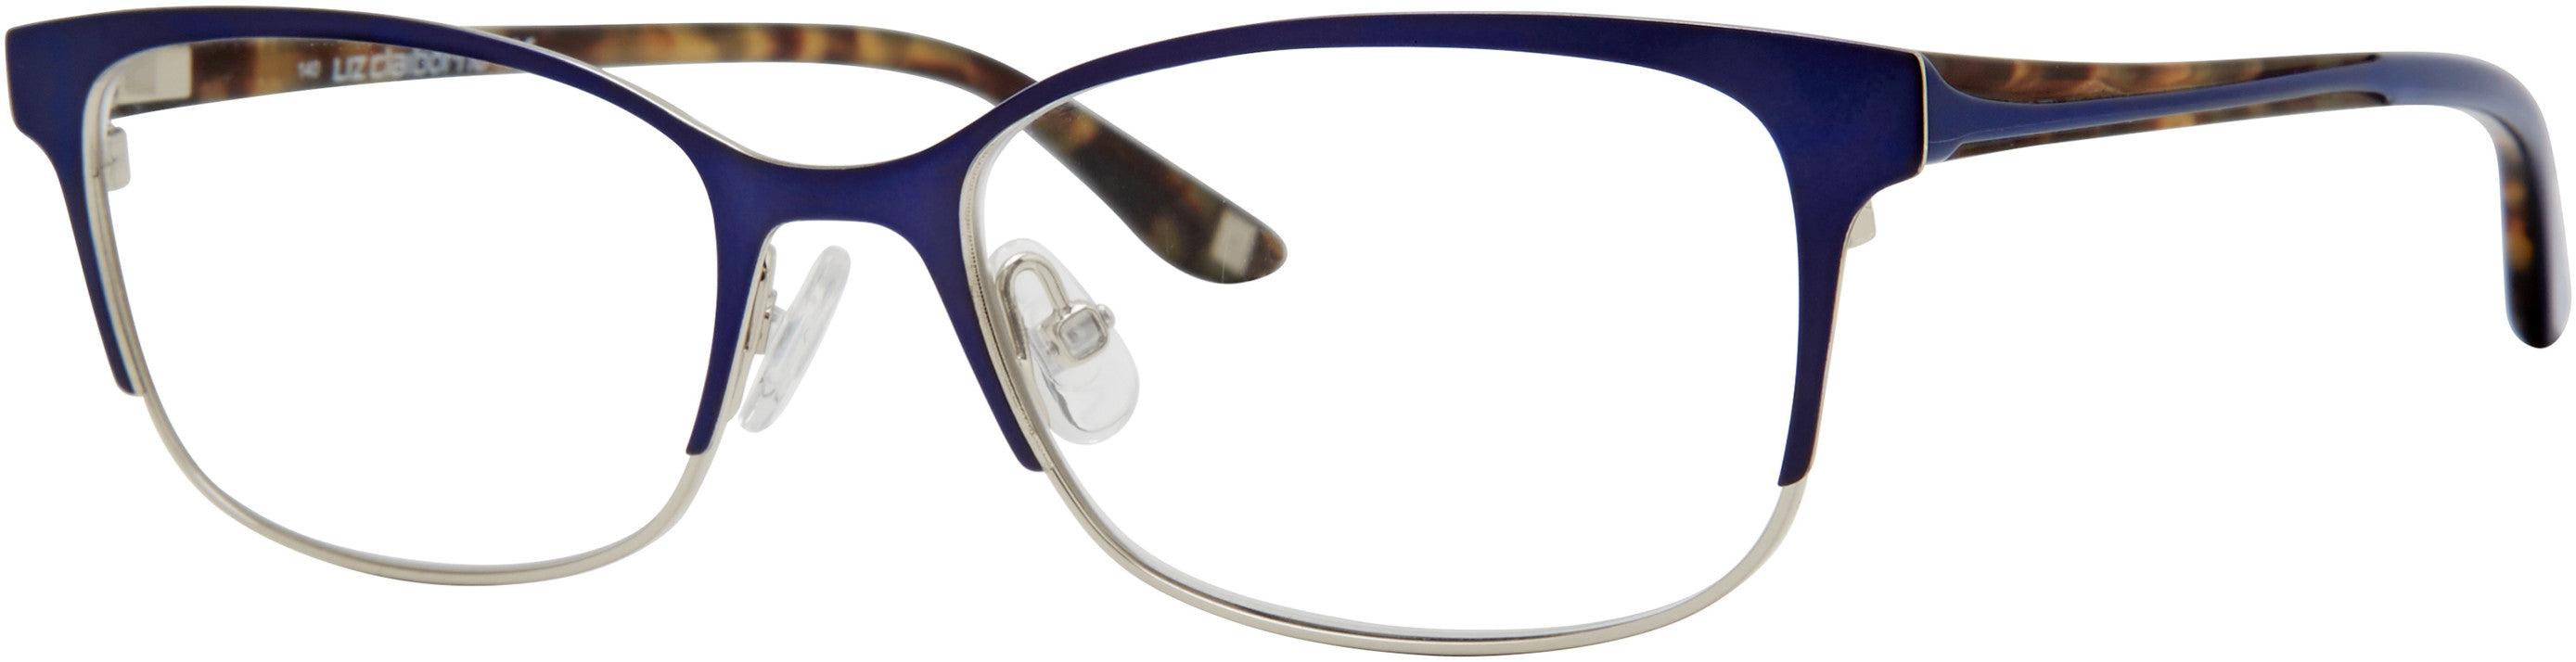  Liz Claiborne 644 Rectangular Eyeglasses 00JI-00JI  Blue Pdbl (00 Demo Lens)